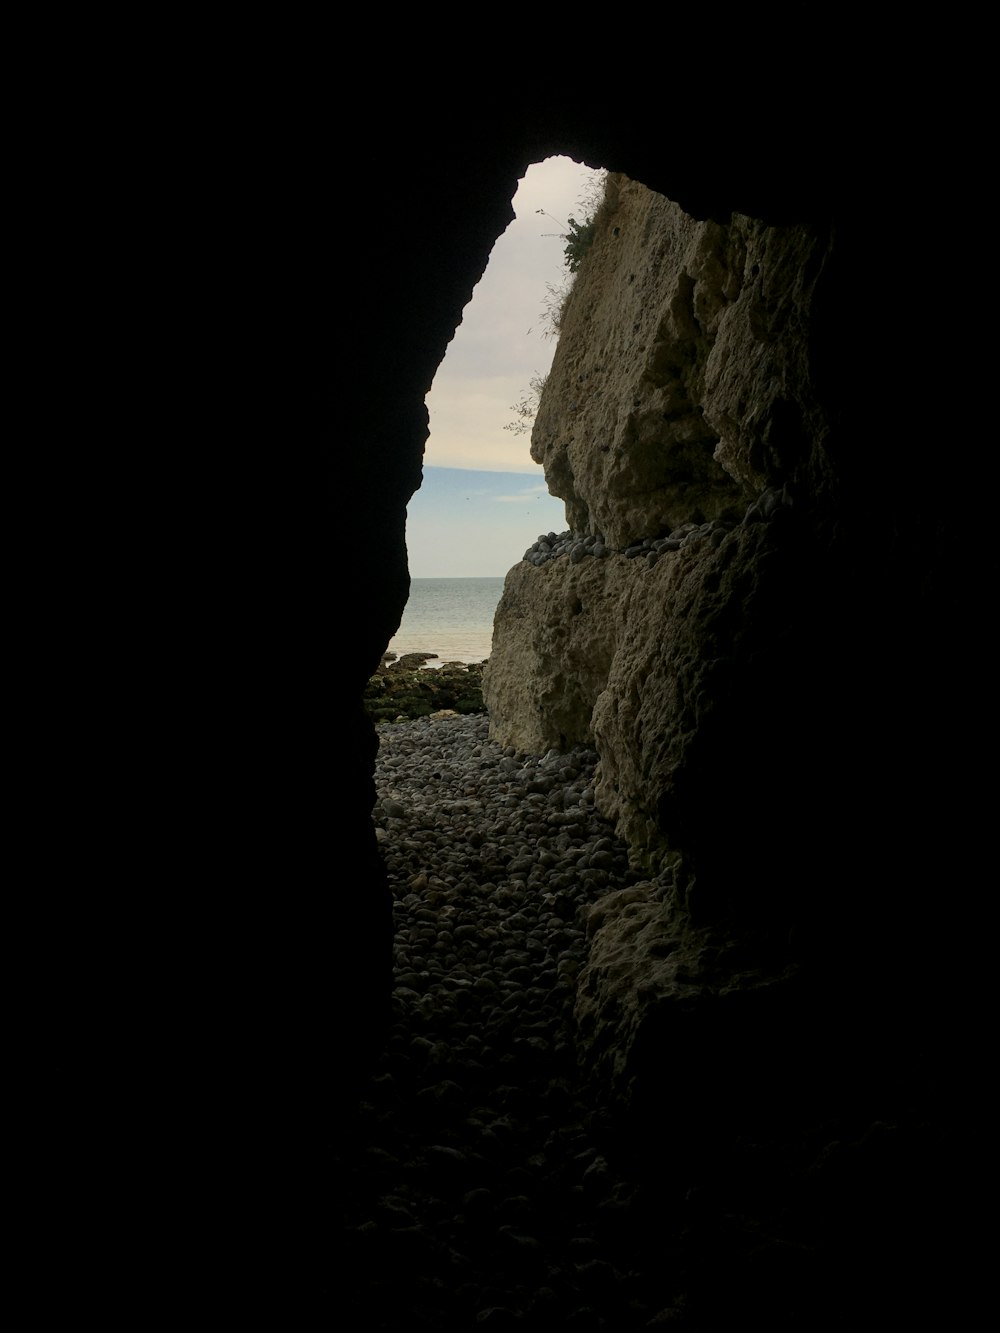 a view of the ocean through a cave